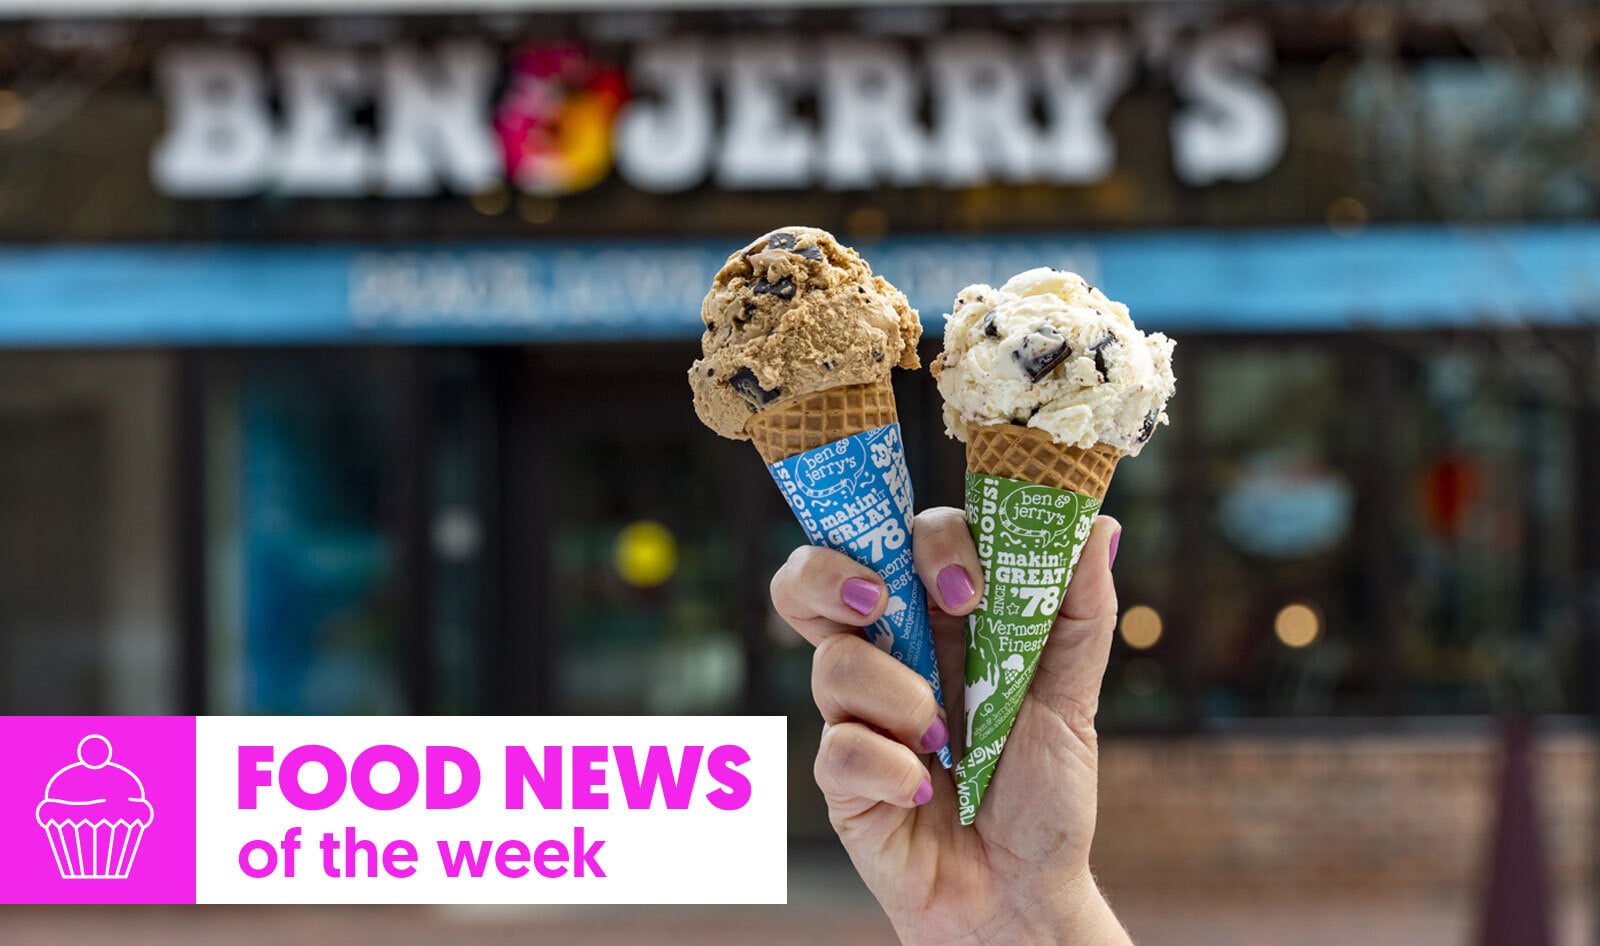 Vegan Food News of the Week: Free Ben & Jerry’s Cones, Animal-Free Breyers, and Mini Cinnamon Rolls